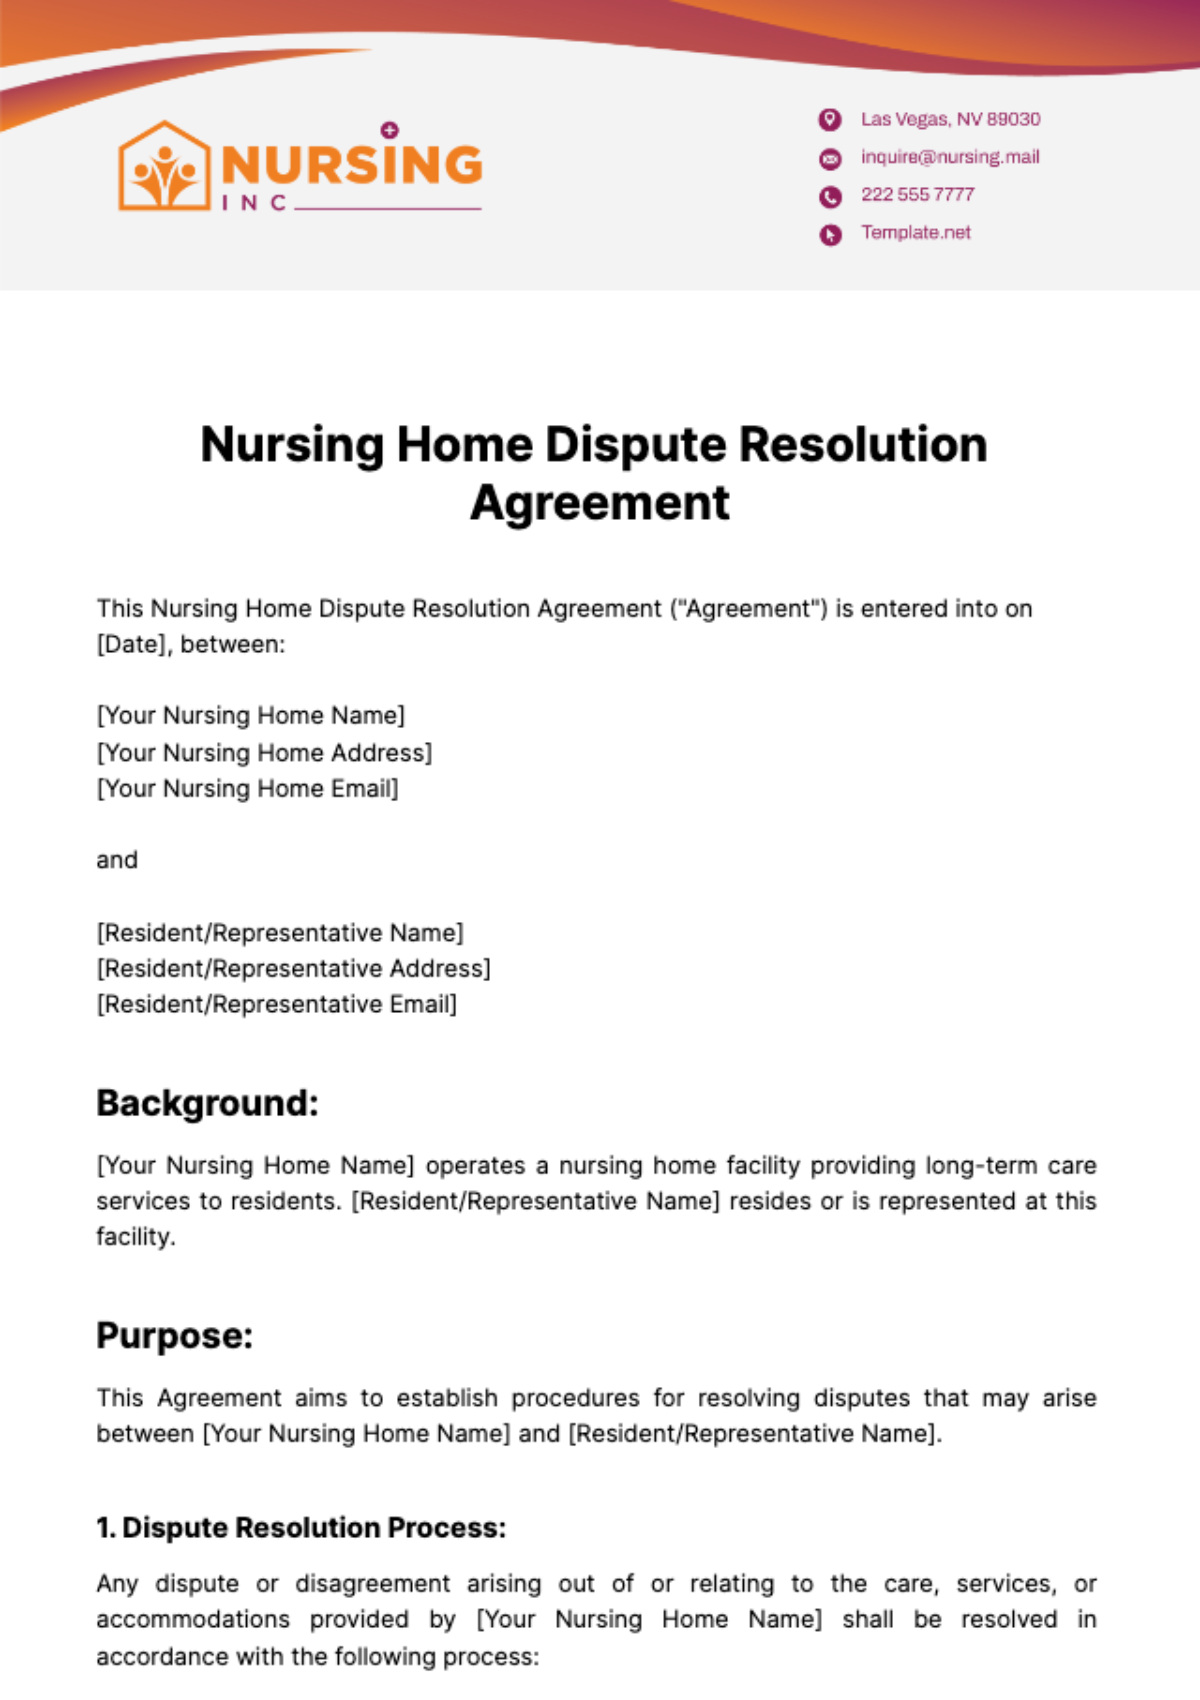 Nursing Home Dispute Resolution Agreement Template